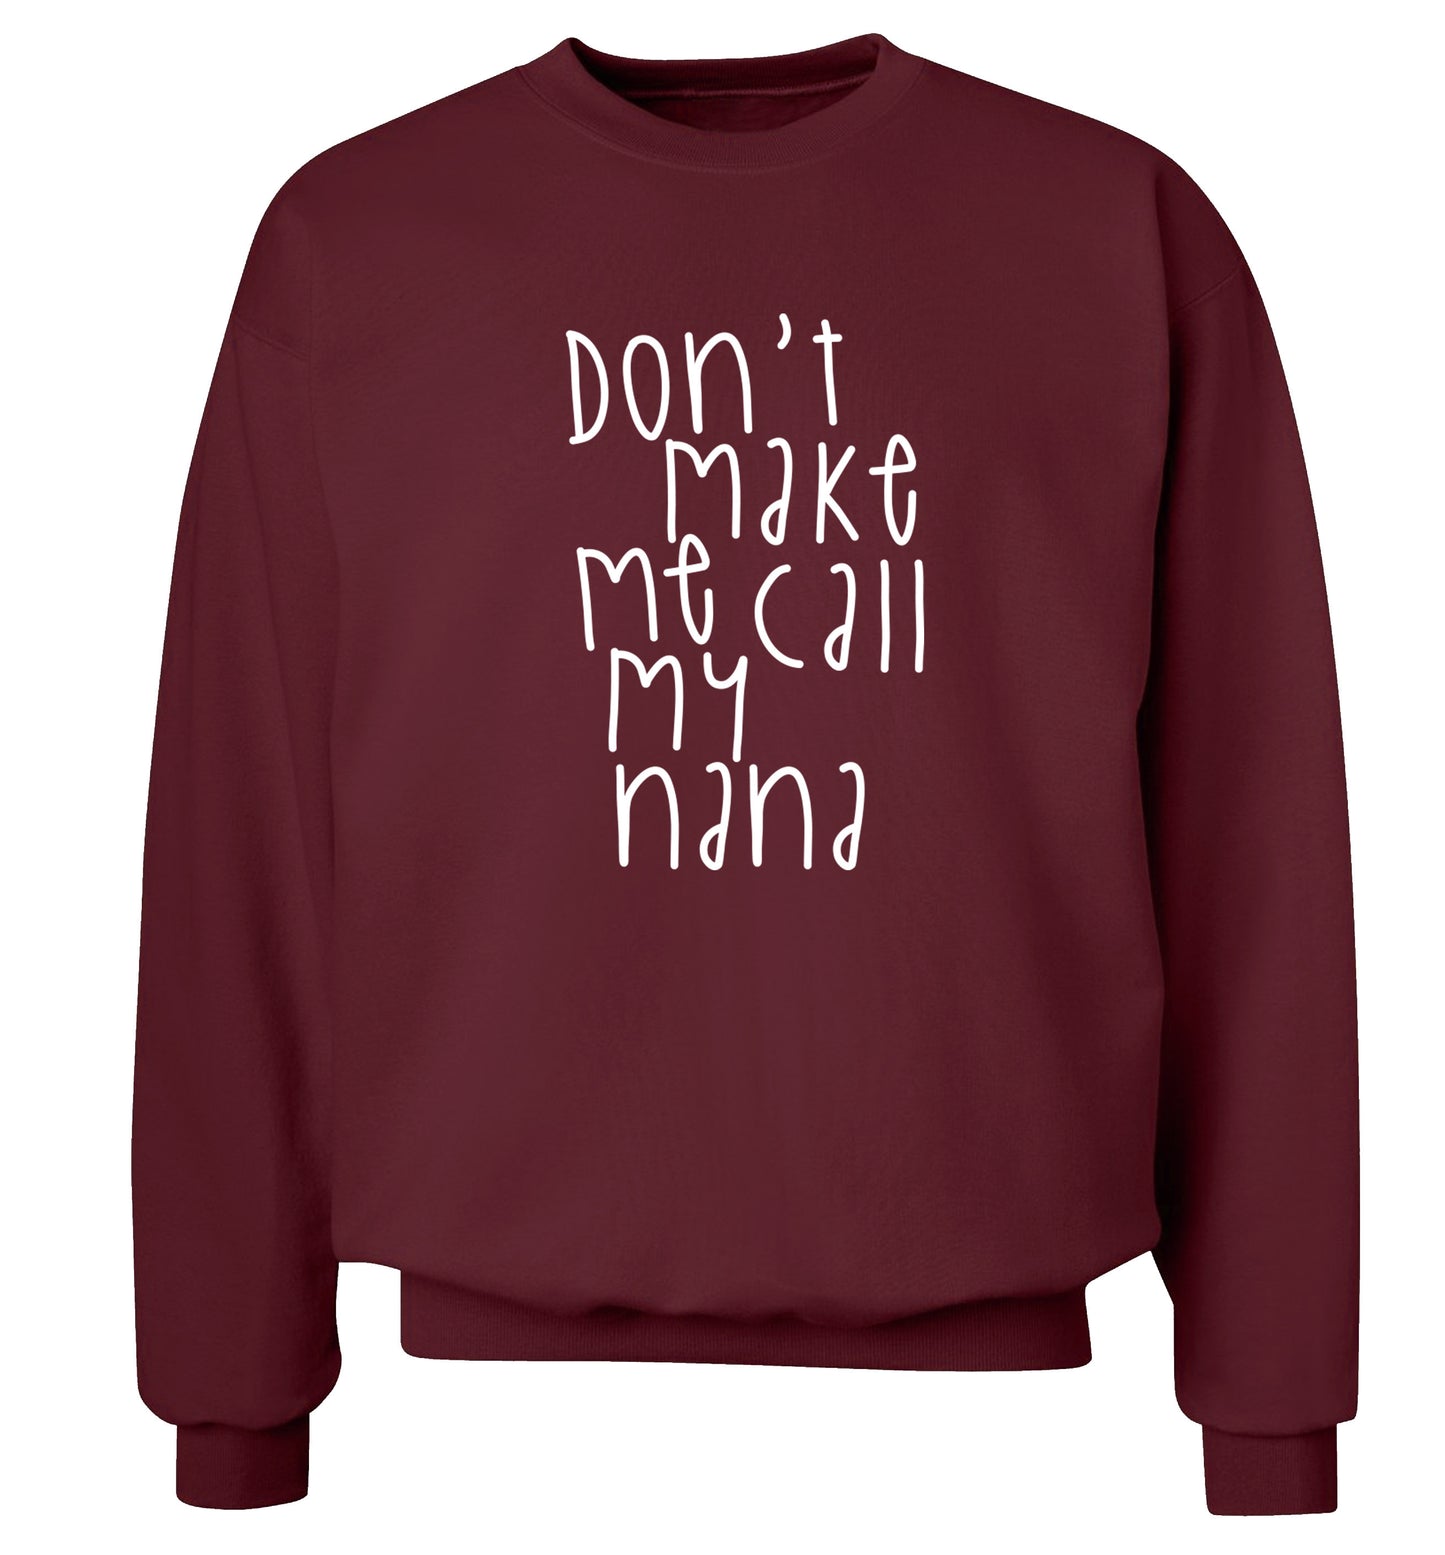 Don't make me call my nana Adult's unisex maroon Sweater 2XL